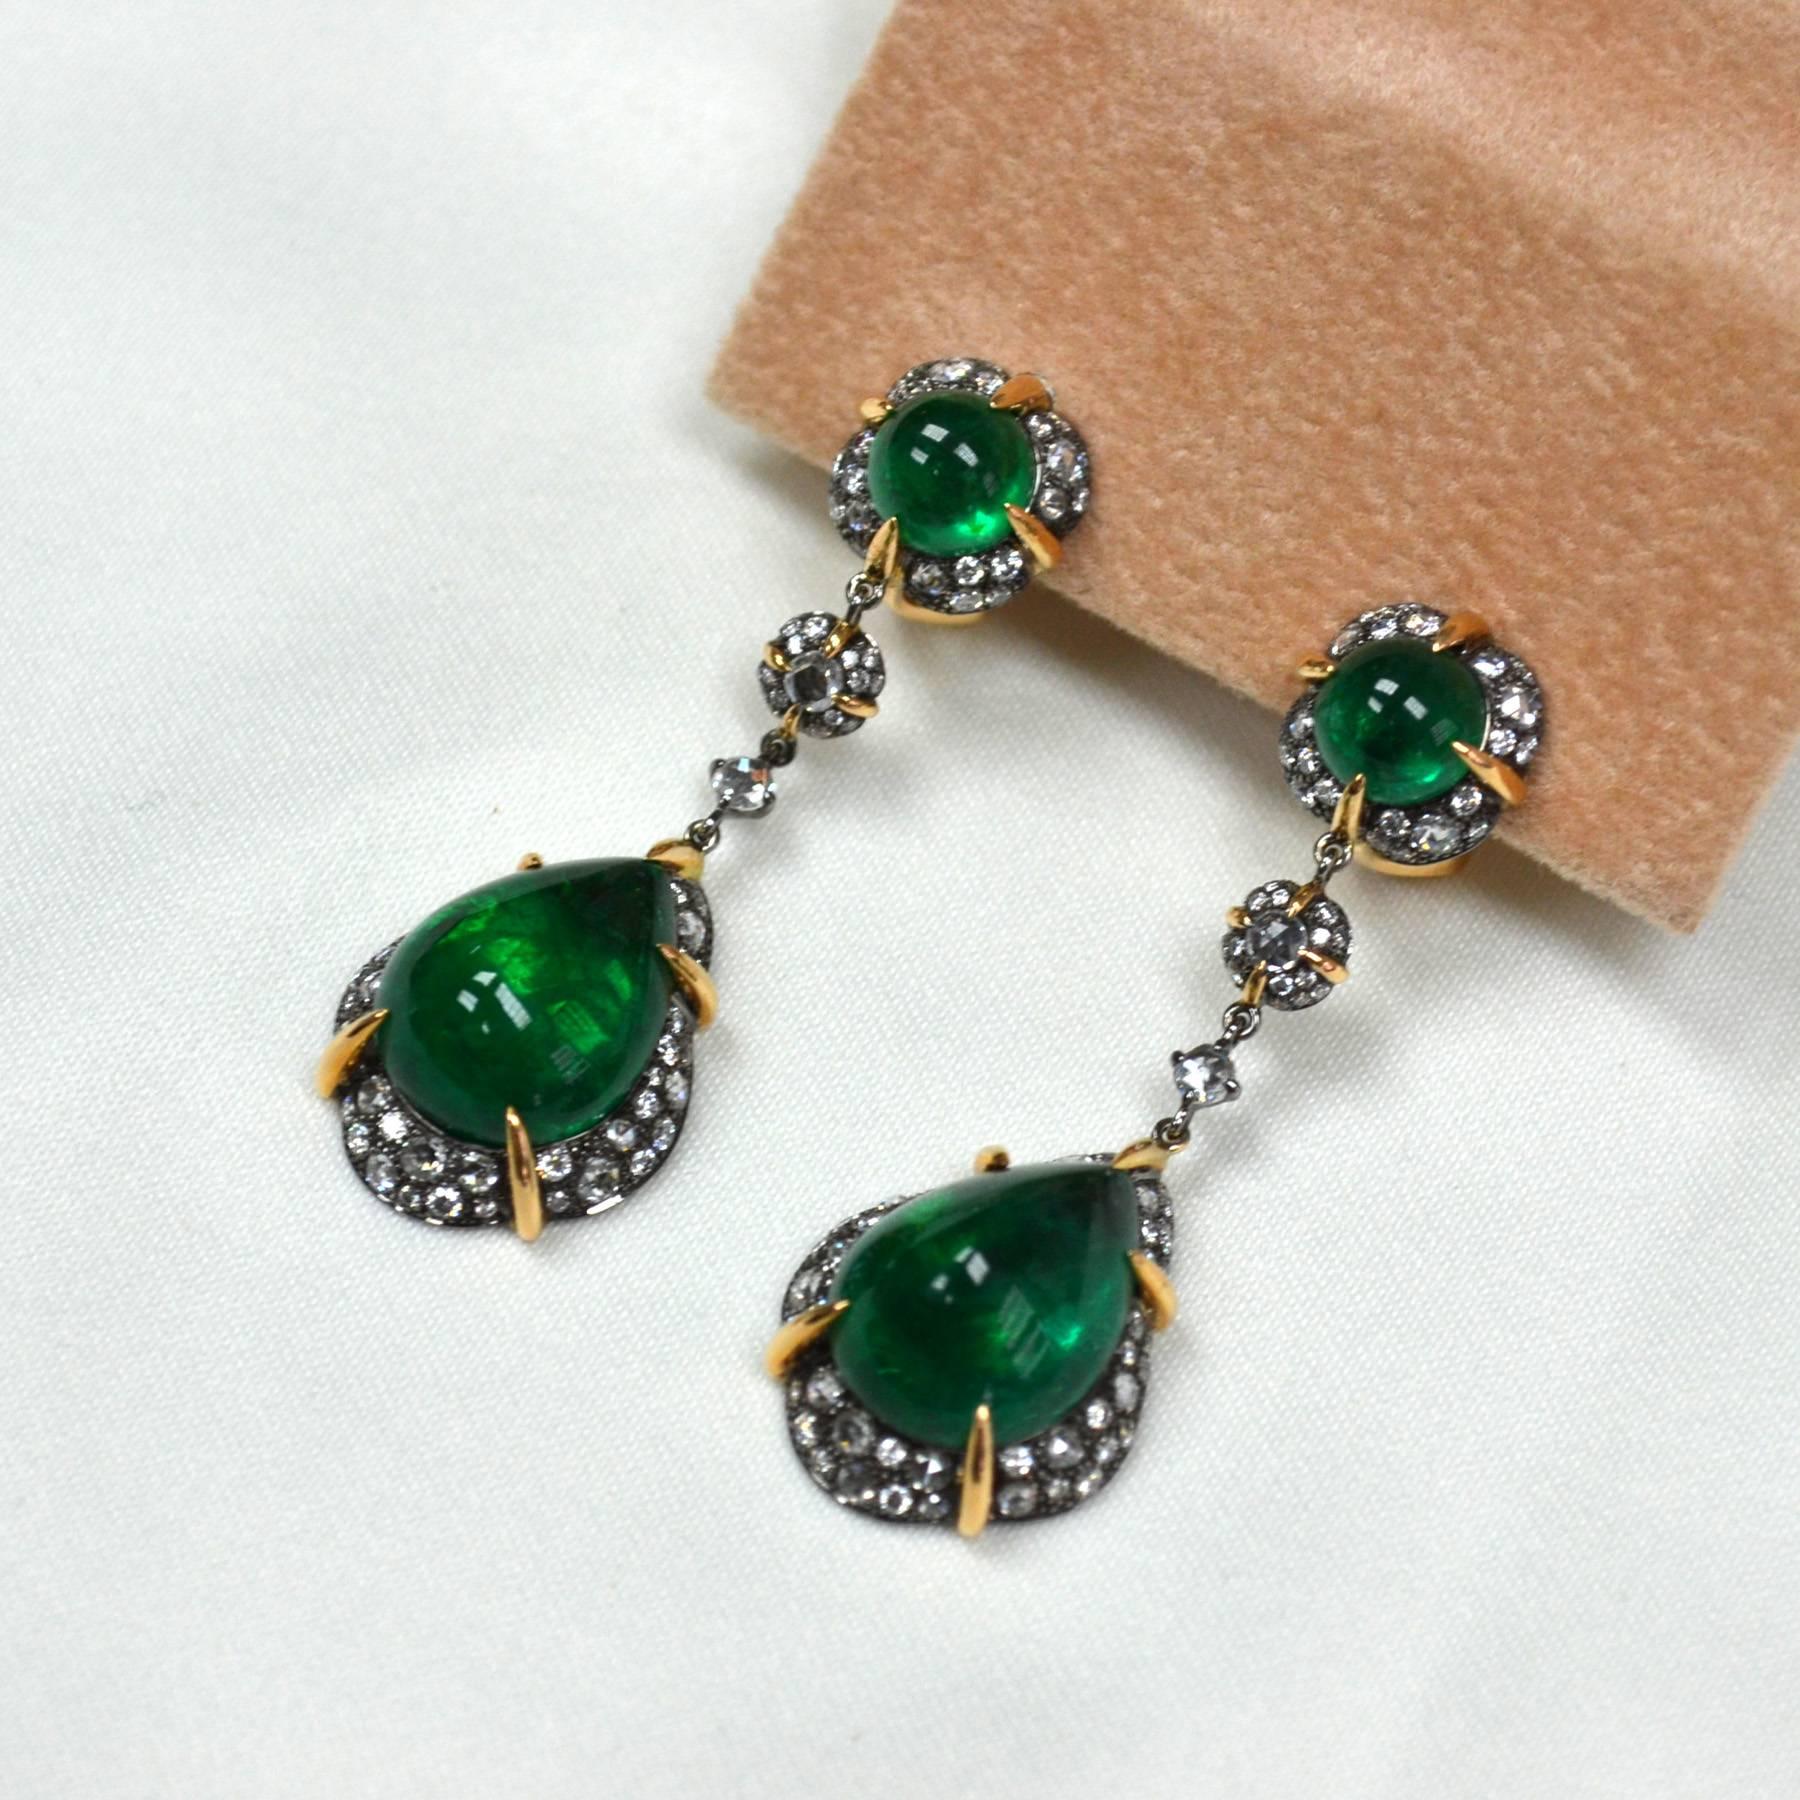 Earrings in 18 karat two-tone gold set with 2 intense green pear cabochon Zambian Emeralds (12.87 carats), 2 round cabochon Emeralds (2.87 carats), 38 rose cut Diamonds (0.63 carats), and 132 round brilliant-cut Diamonds (0.71 carats).
Featuring 2